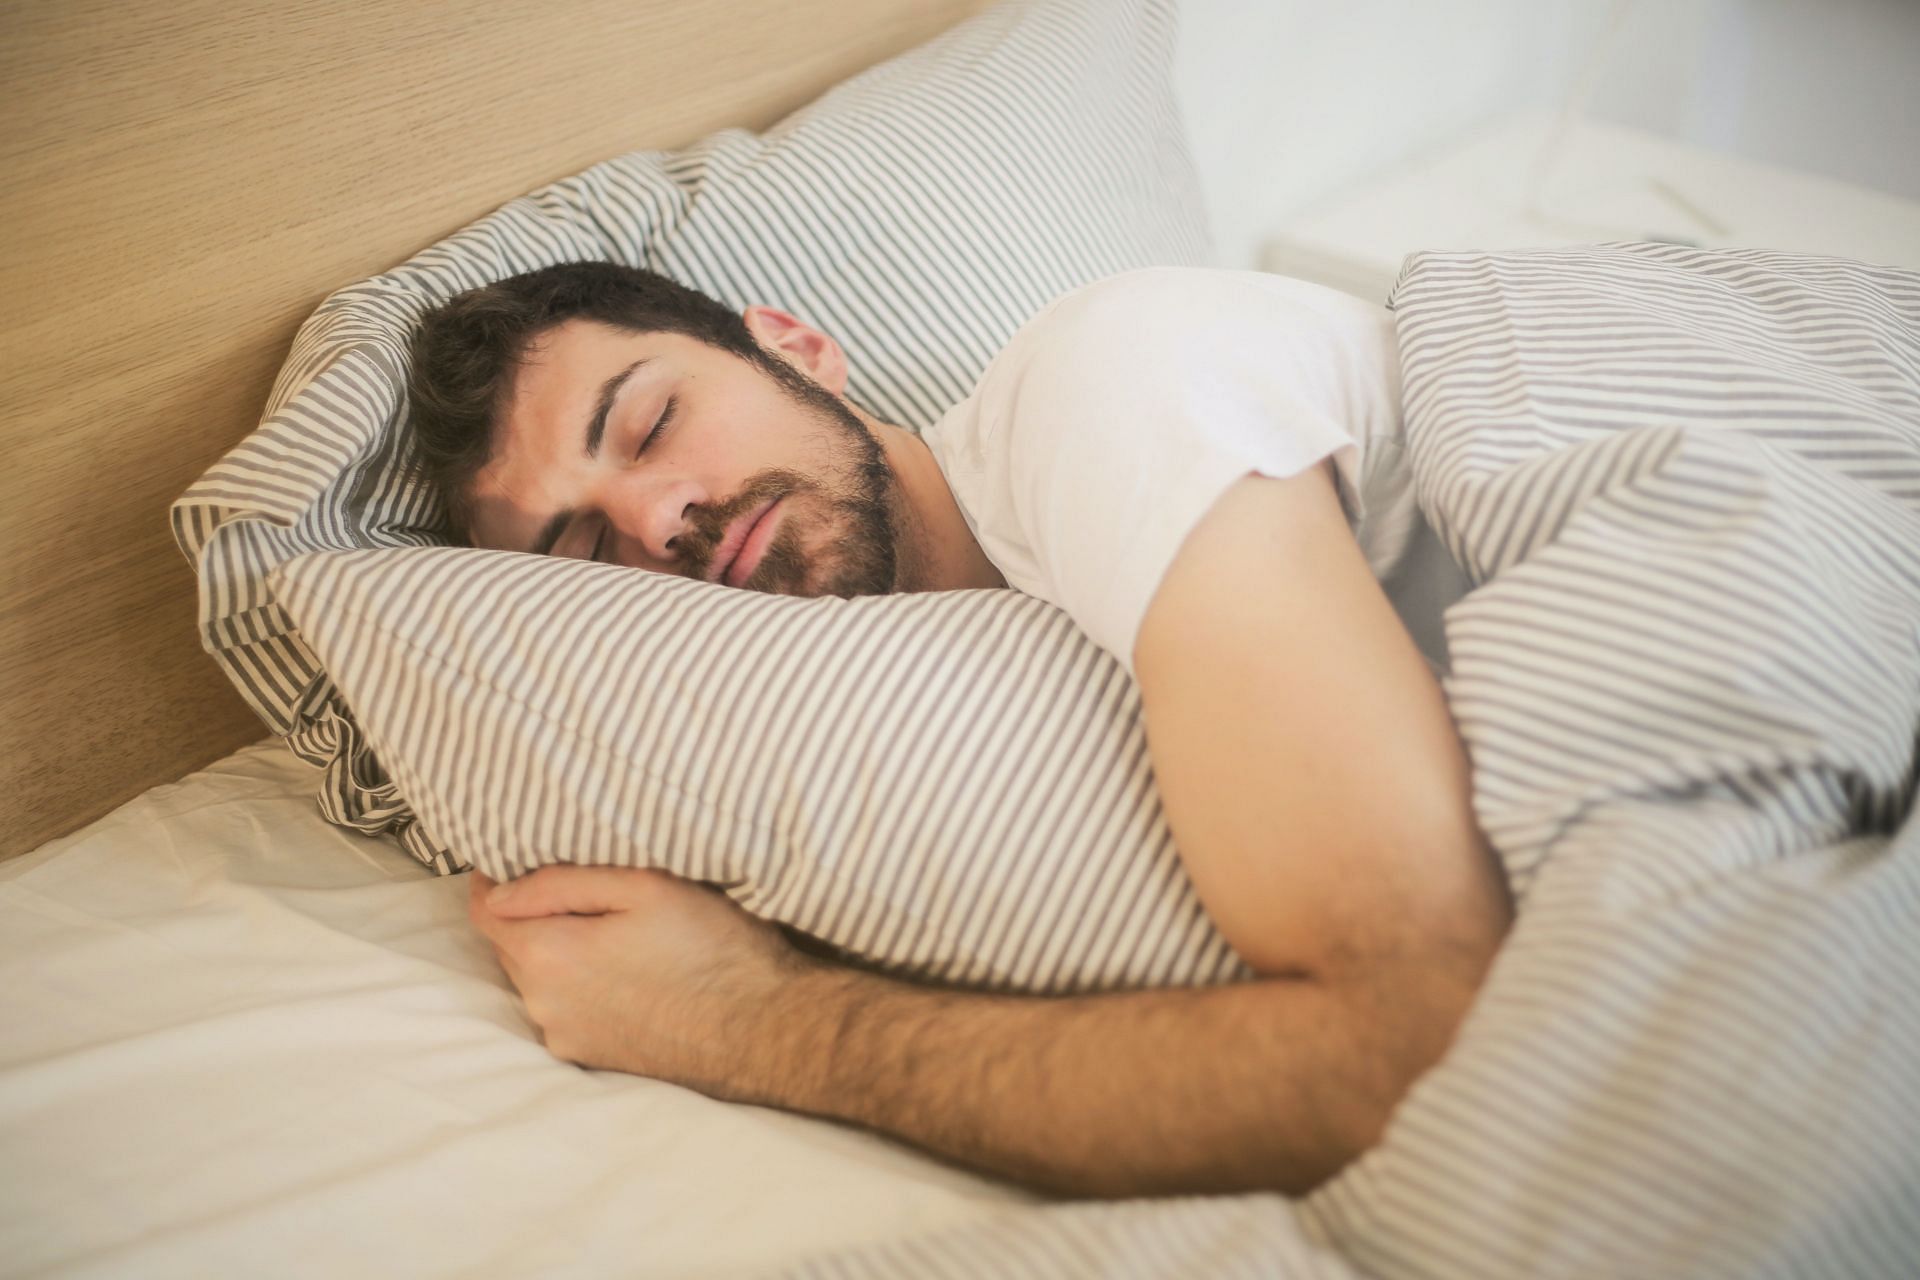 Sleep quality is improved. (Image via Pexels / Andrea Piacquadio)